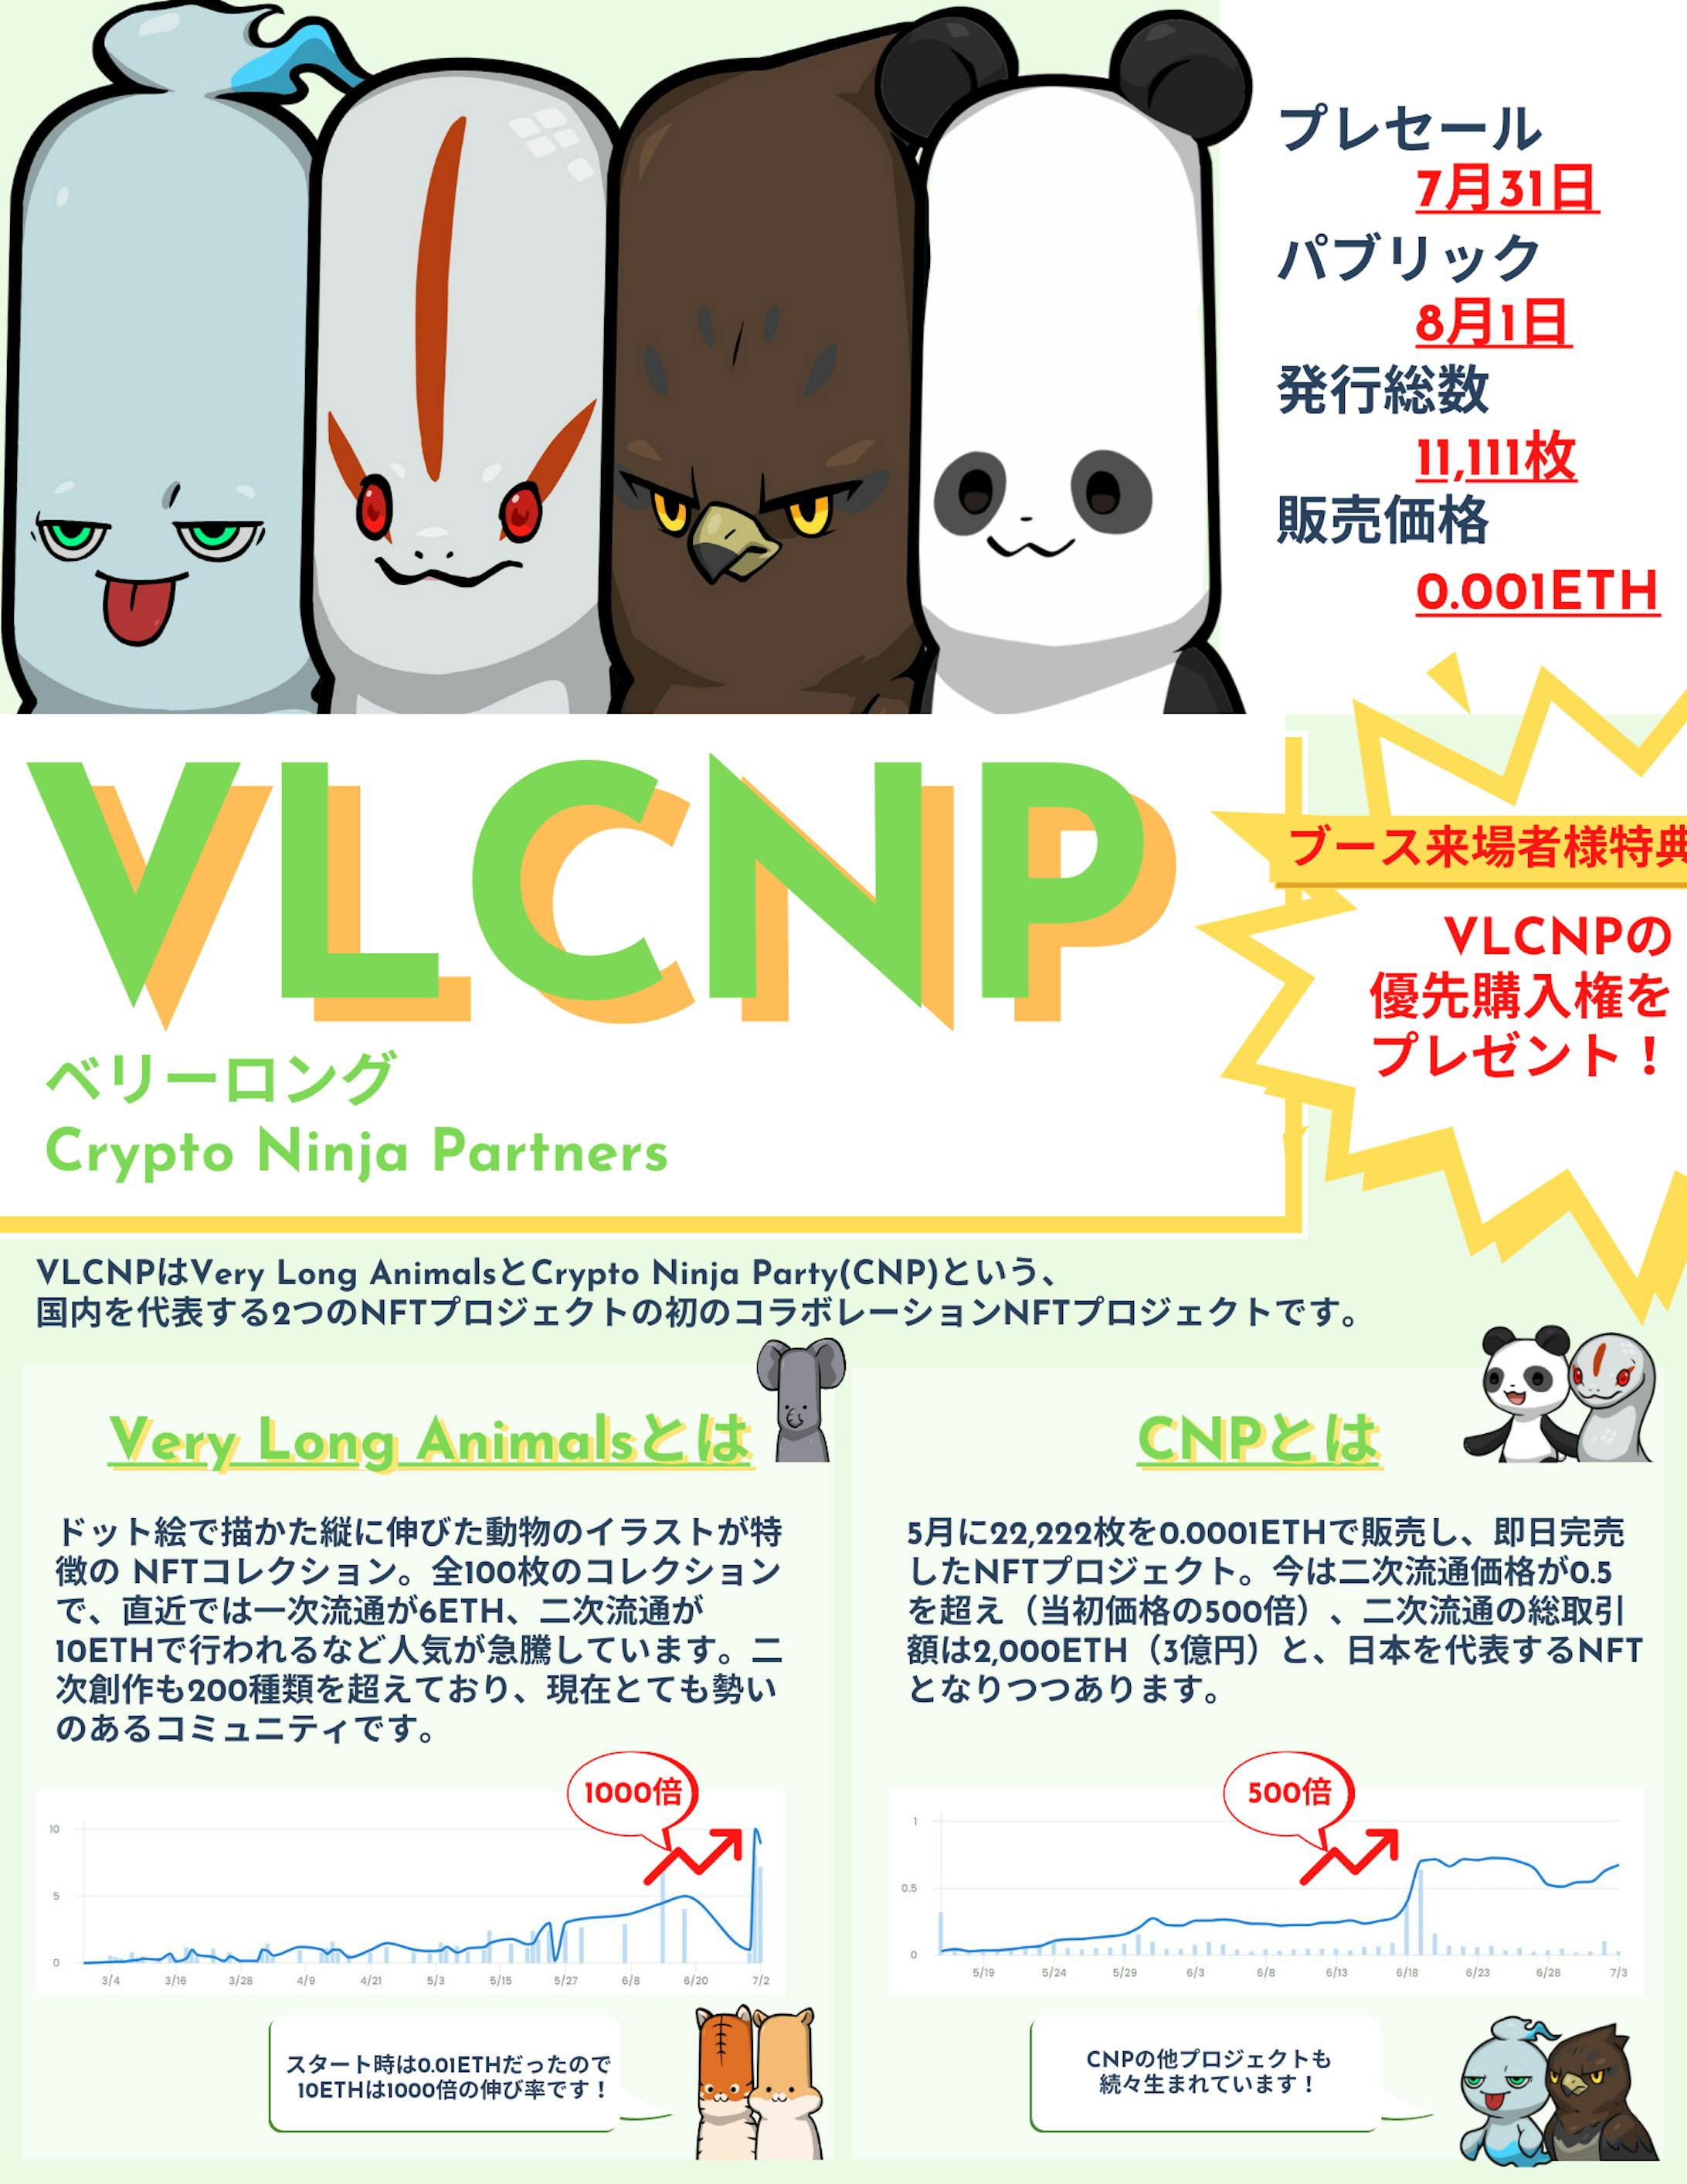 VLCNP チラシデザイン-1